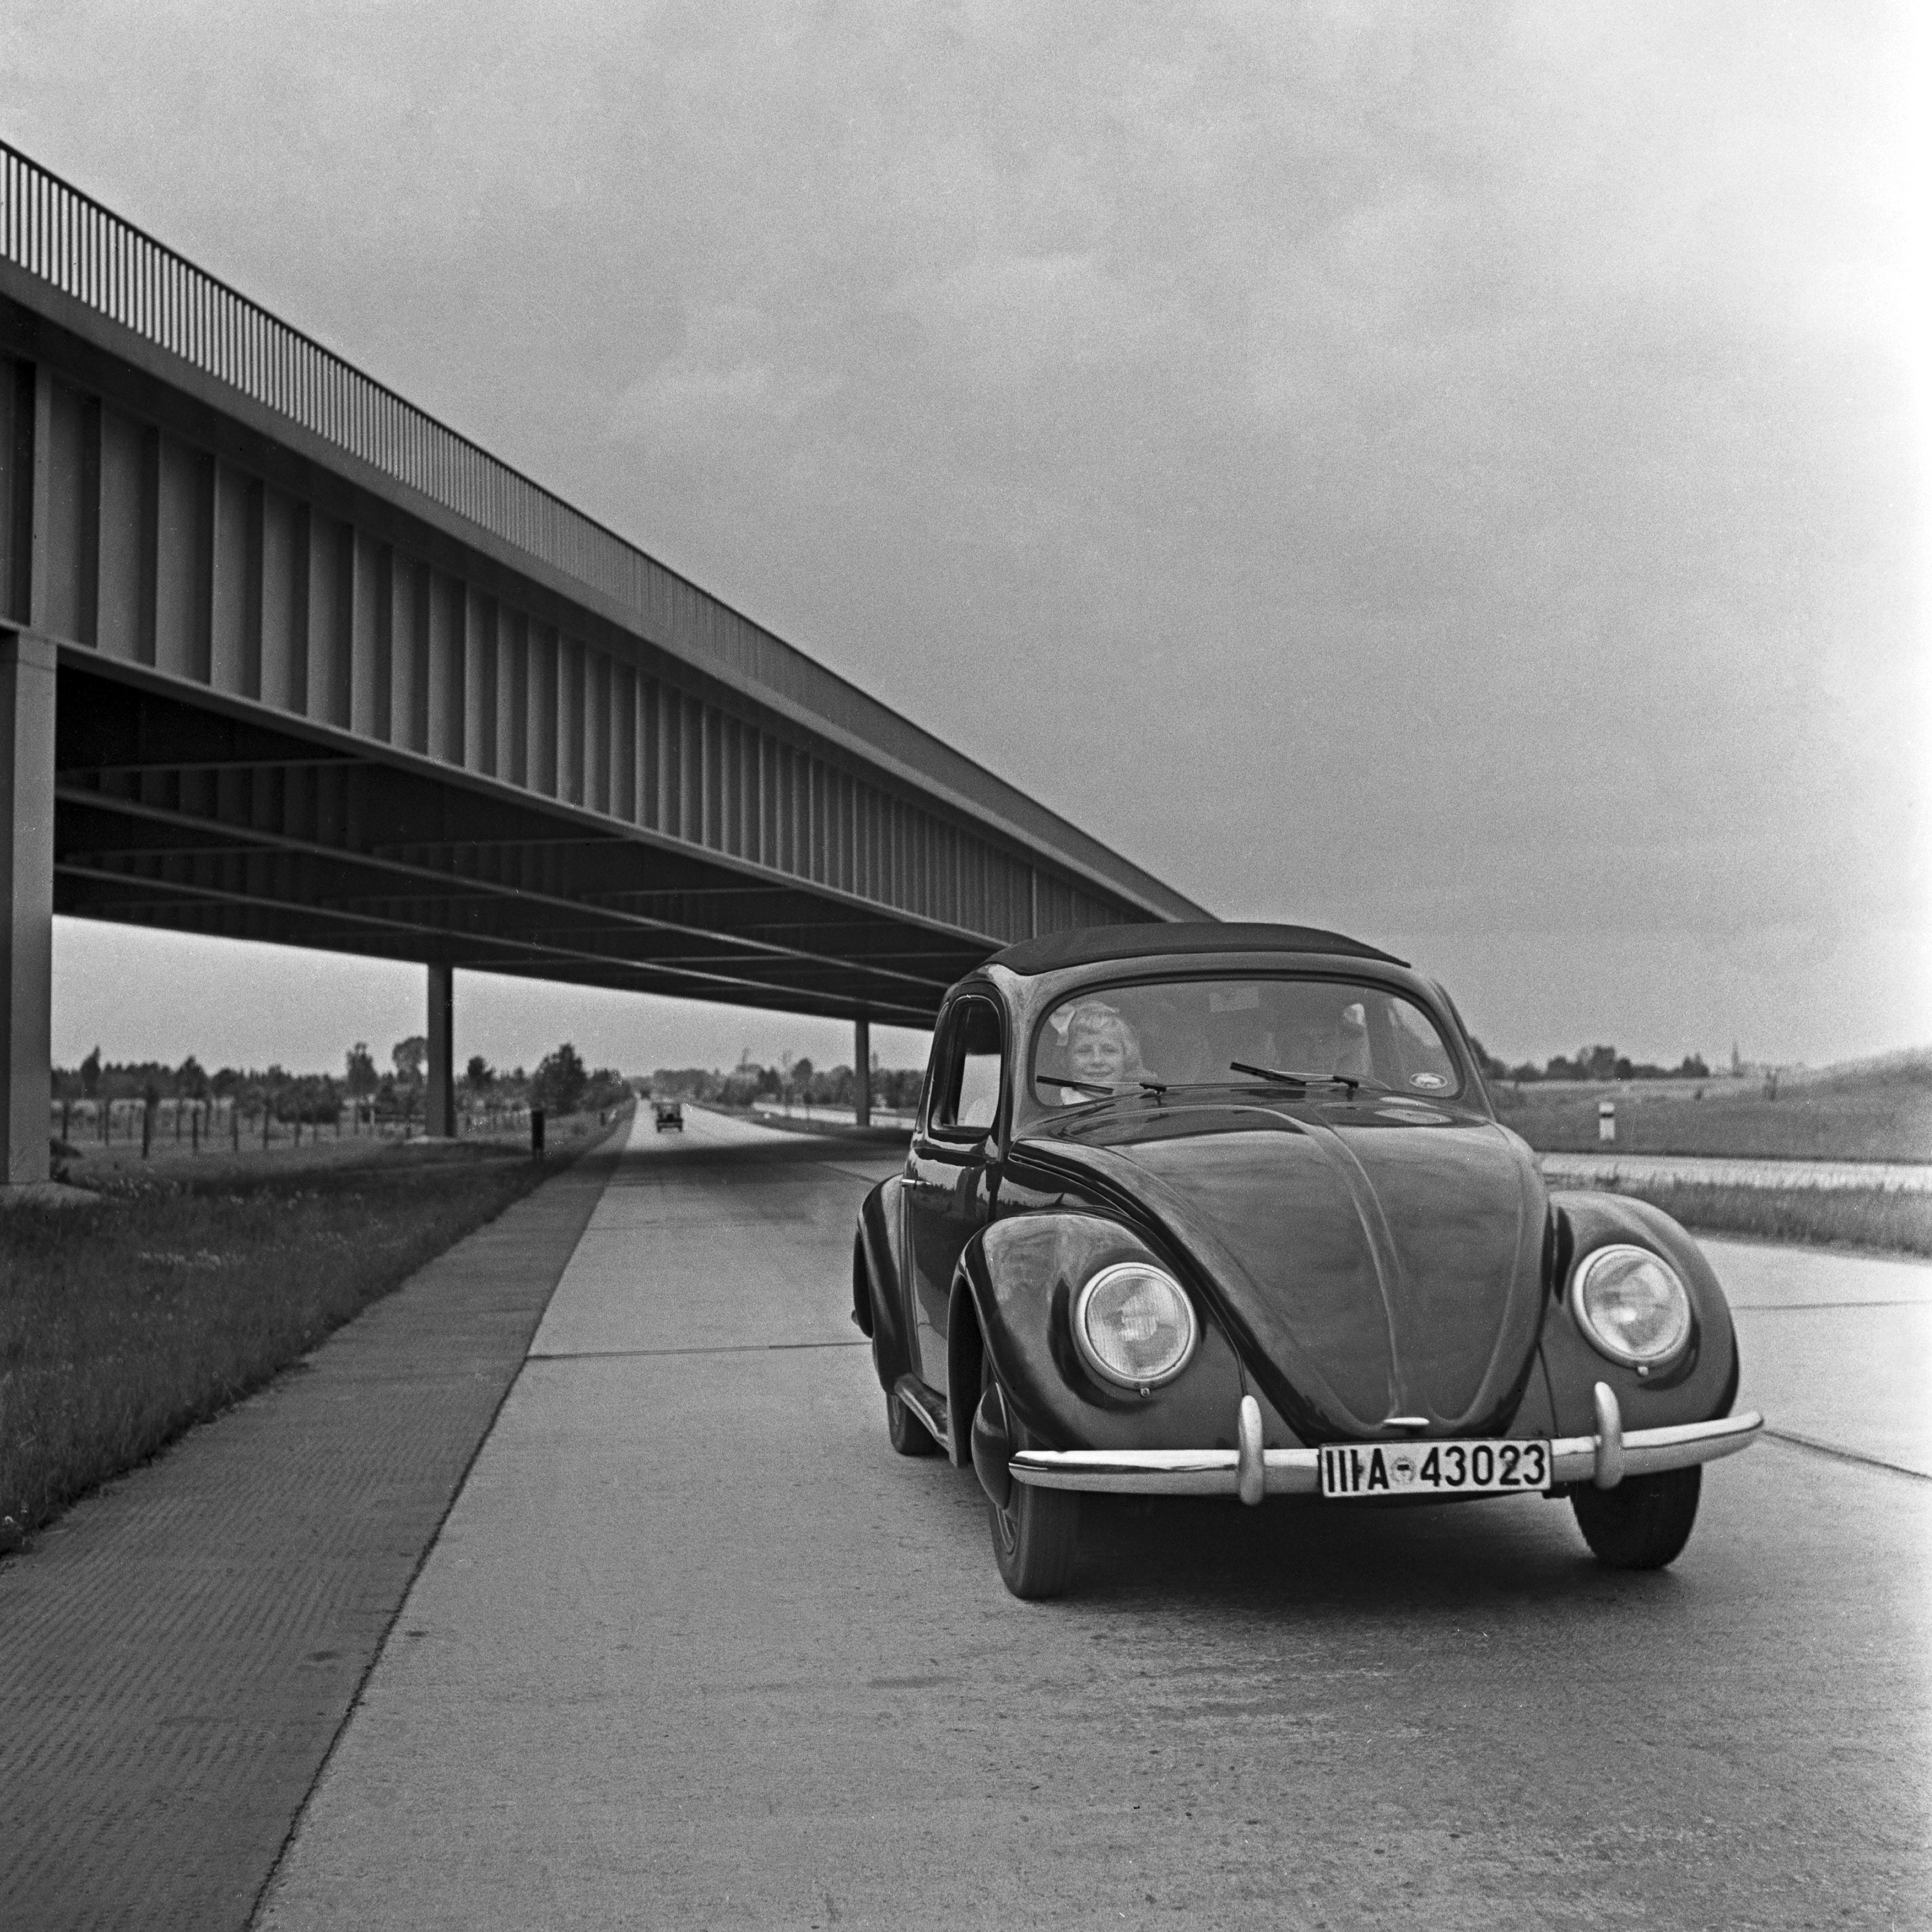 Karl Heinrich Lämmel Black and White Photograph - Volkswagen beetle on highway, Germany 1937 Printed Later 